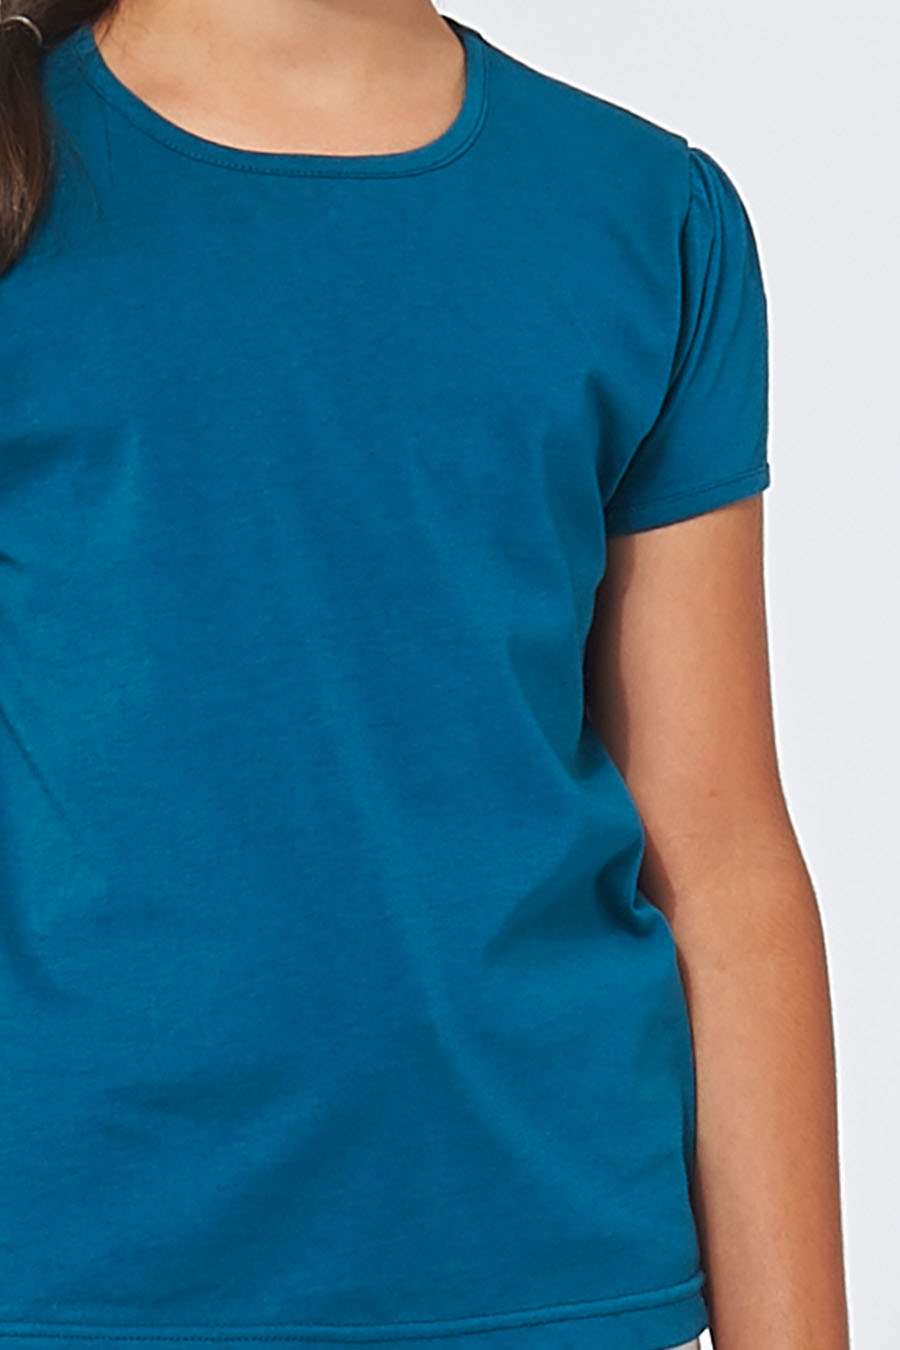 zoom tee-shirt fille made in France en coton bio RAFFAELLA petrole - FIL ROUGE